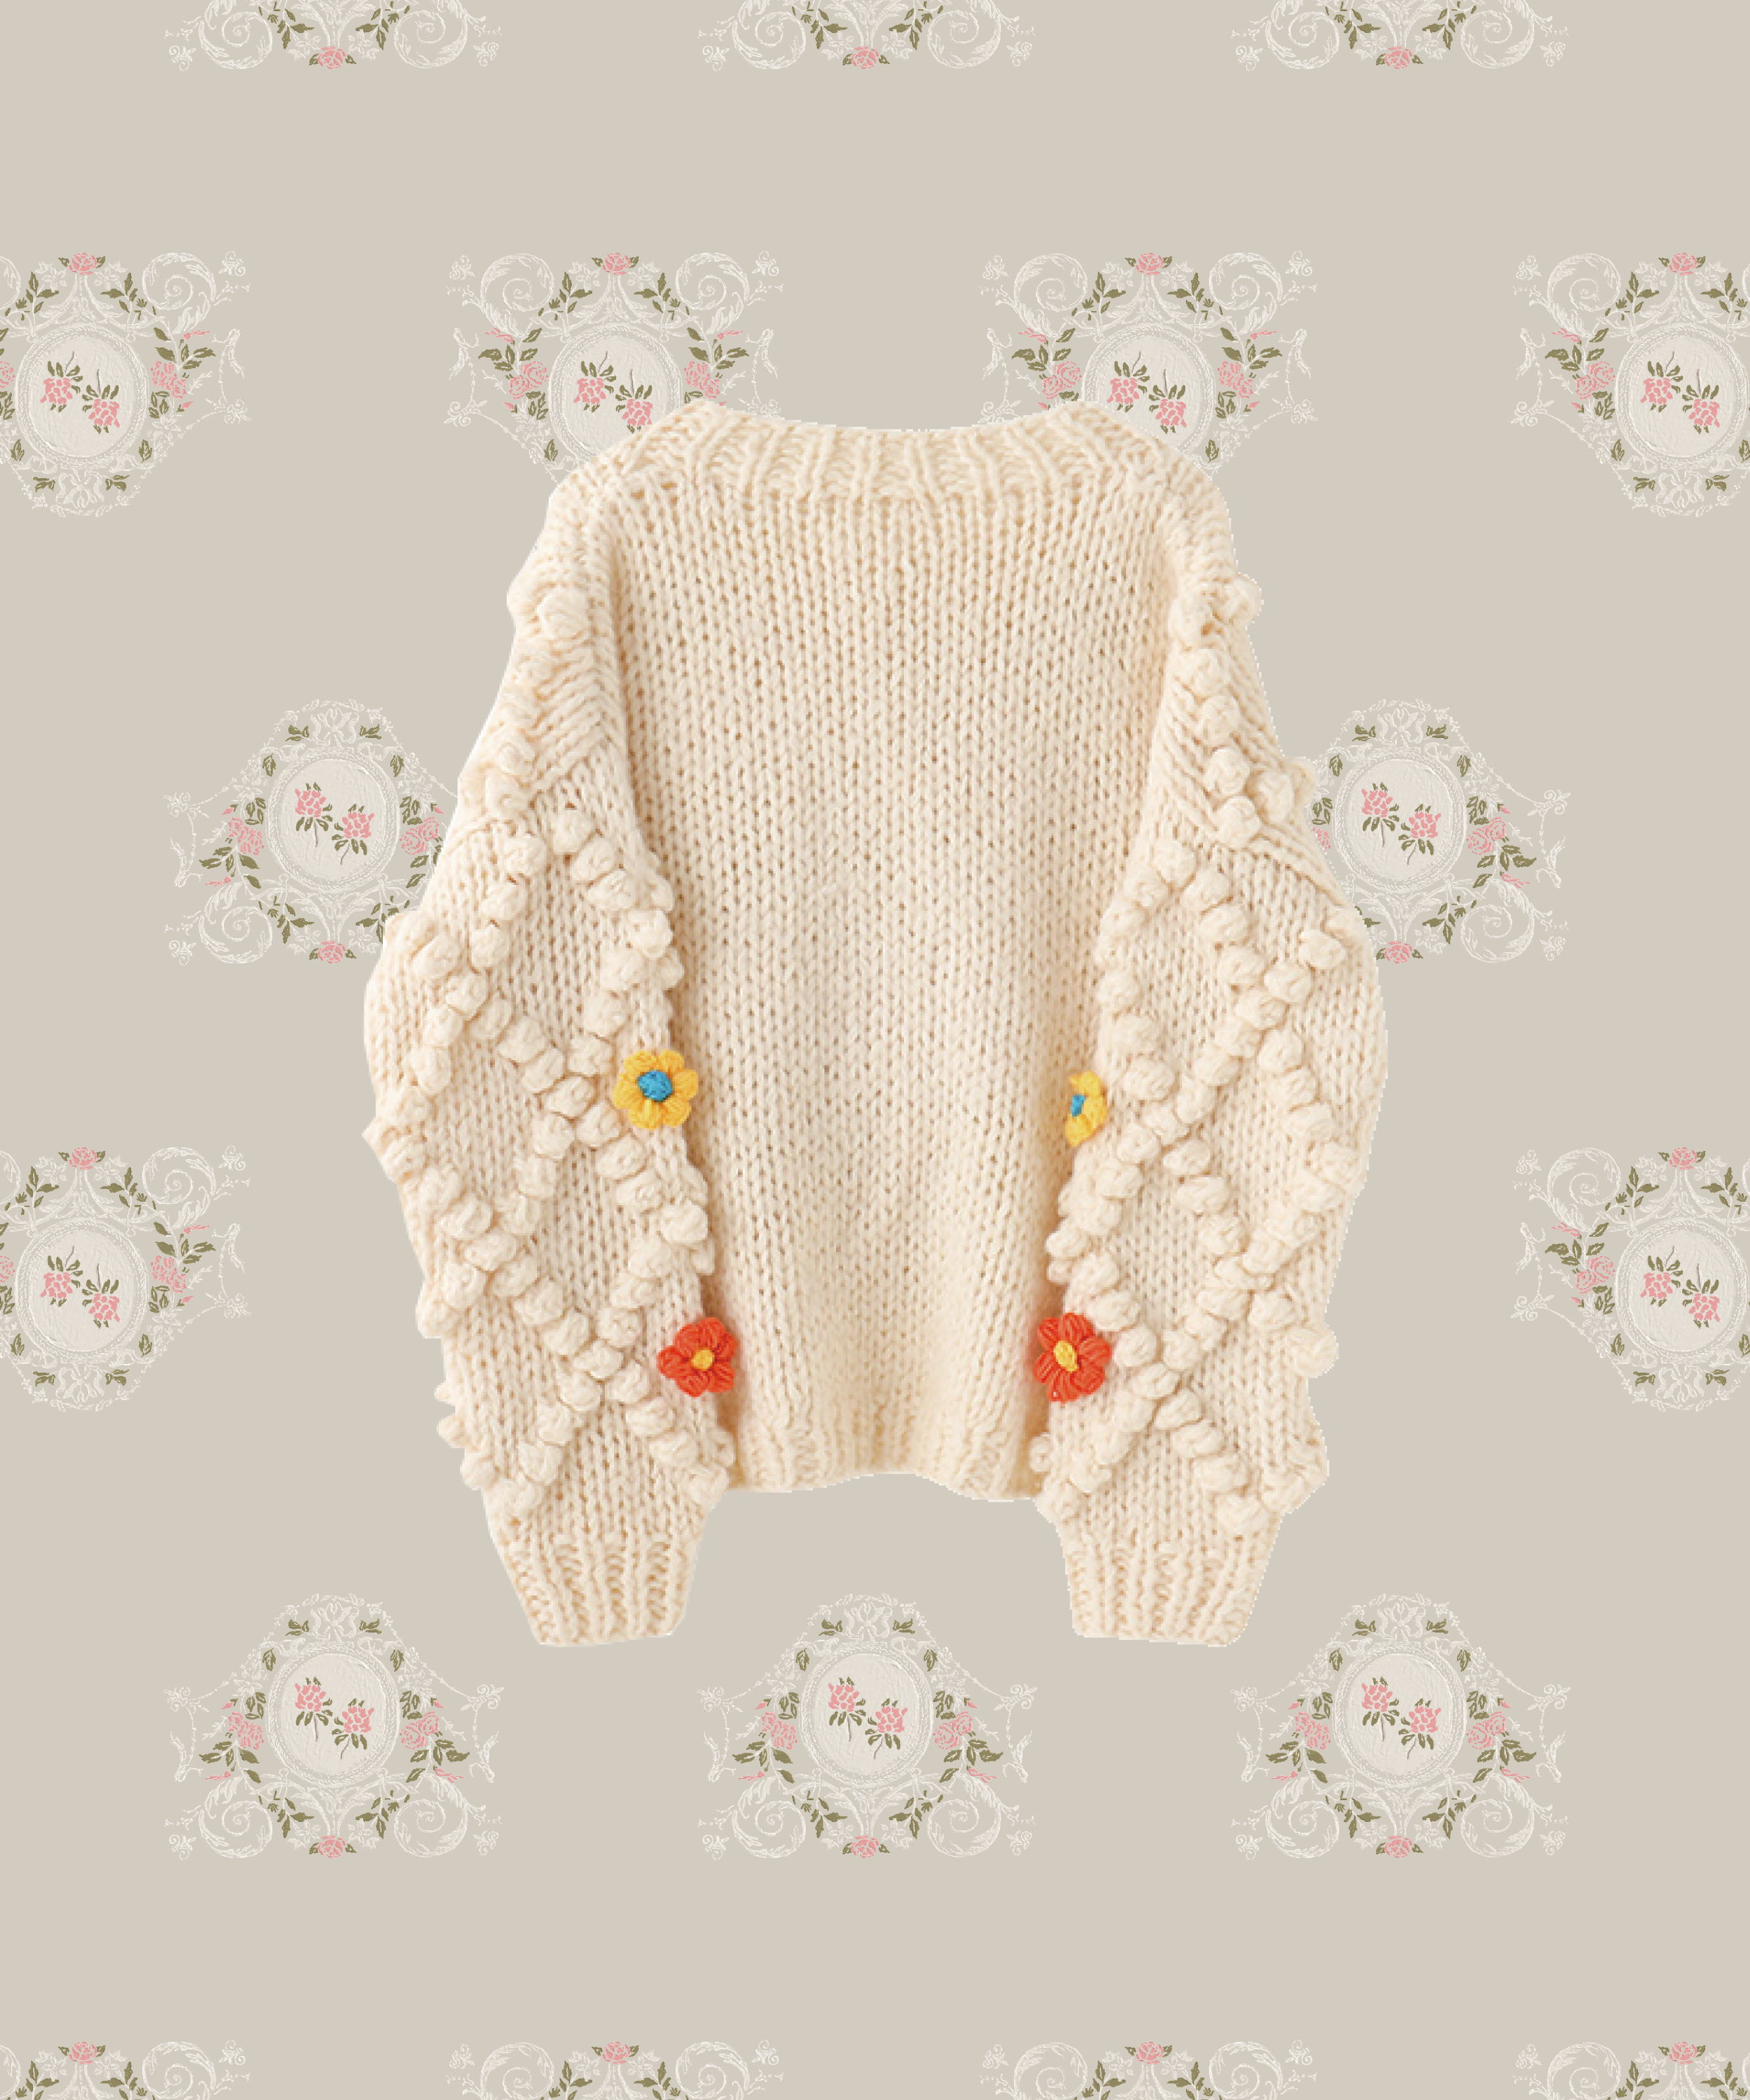 Handmade Garden Crochet Cardigan. ハンドメイドガーデンカーディガン